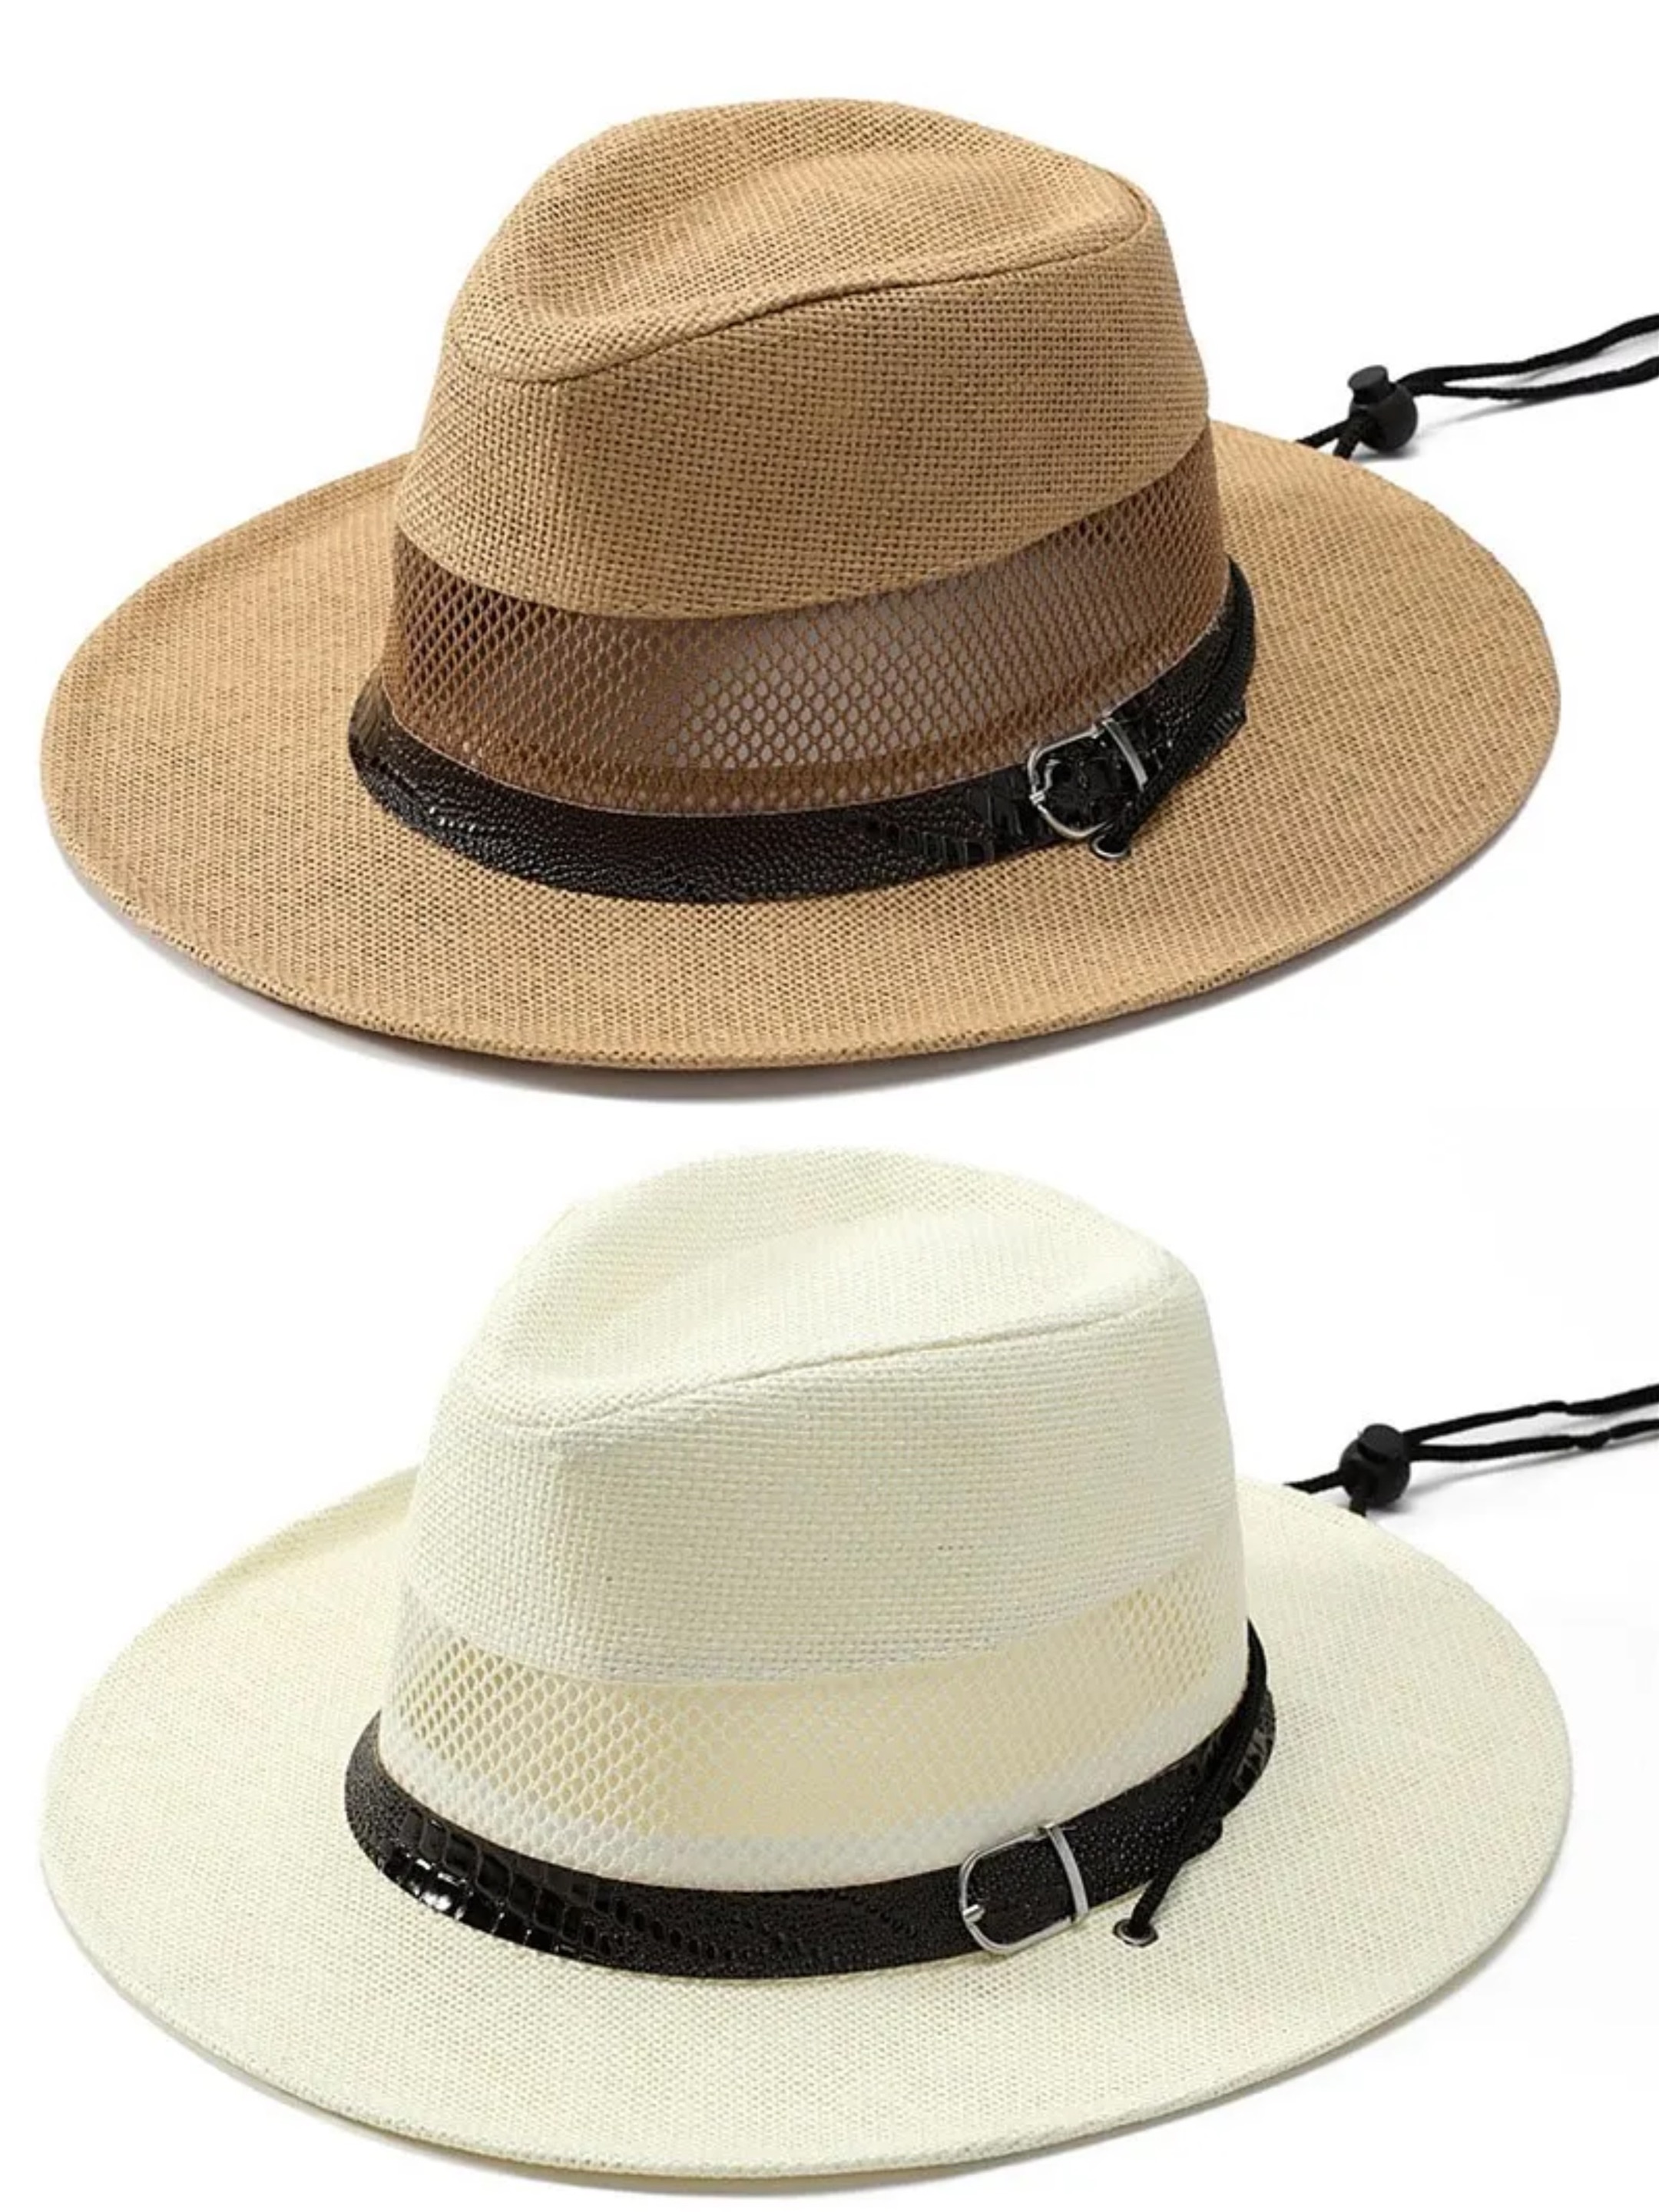 Men's Straw Hat Sun Hat Soaker Hat Safari Hat Gambler Hat White khaki Polyester Travel Beach Vacation Beach Plain Sunscreen